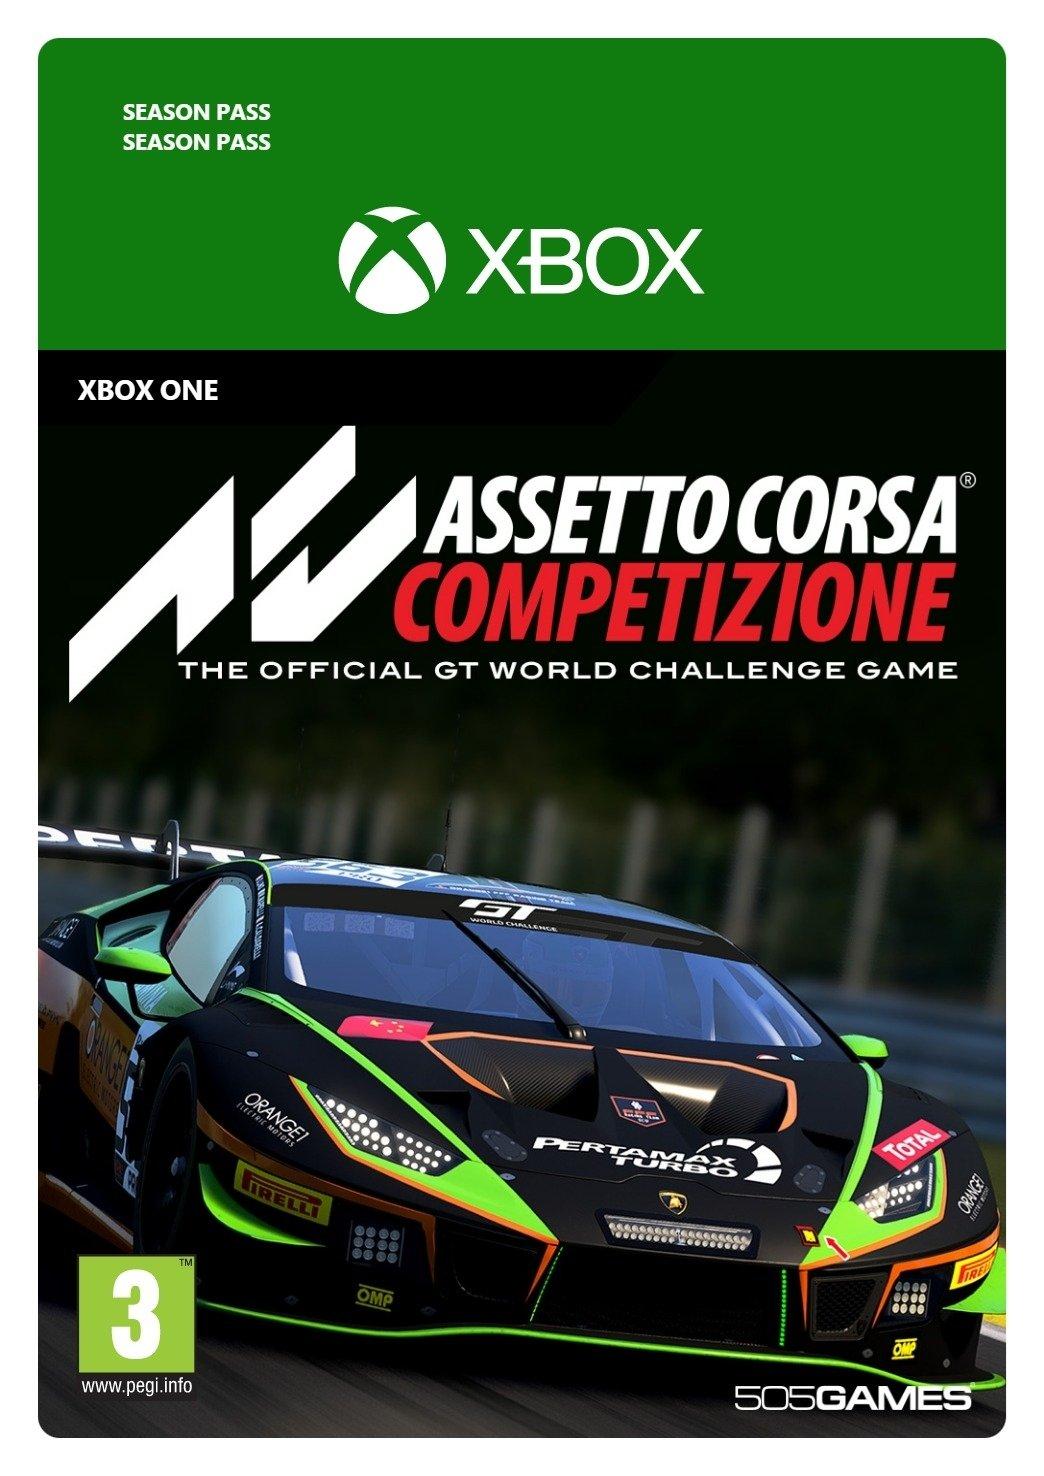 Assetto Corsa Competizione Season Pass - Xbox One - Season Pass | 7D4-00576 (4badb13a-ac63-ba49-8f42-cedc51d5620c)